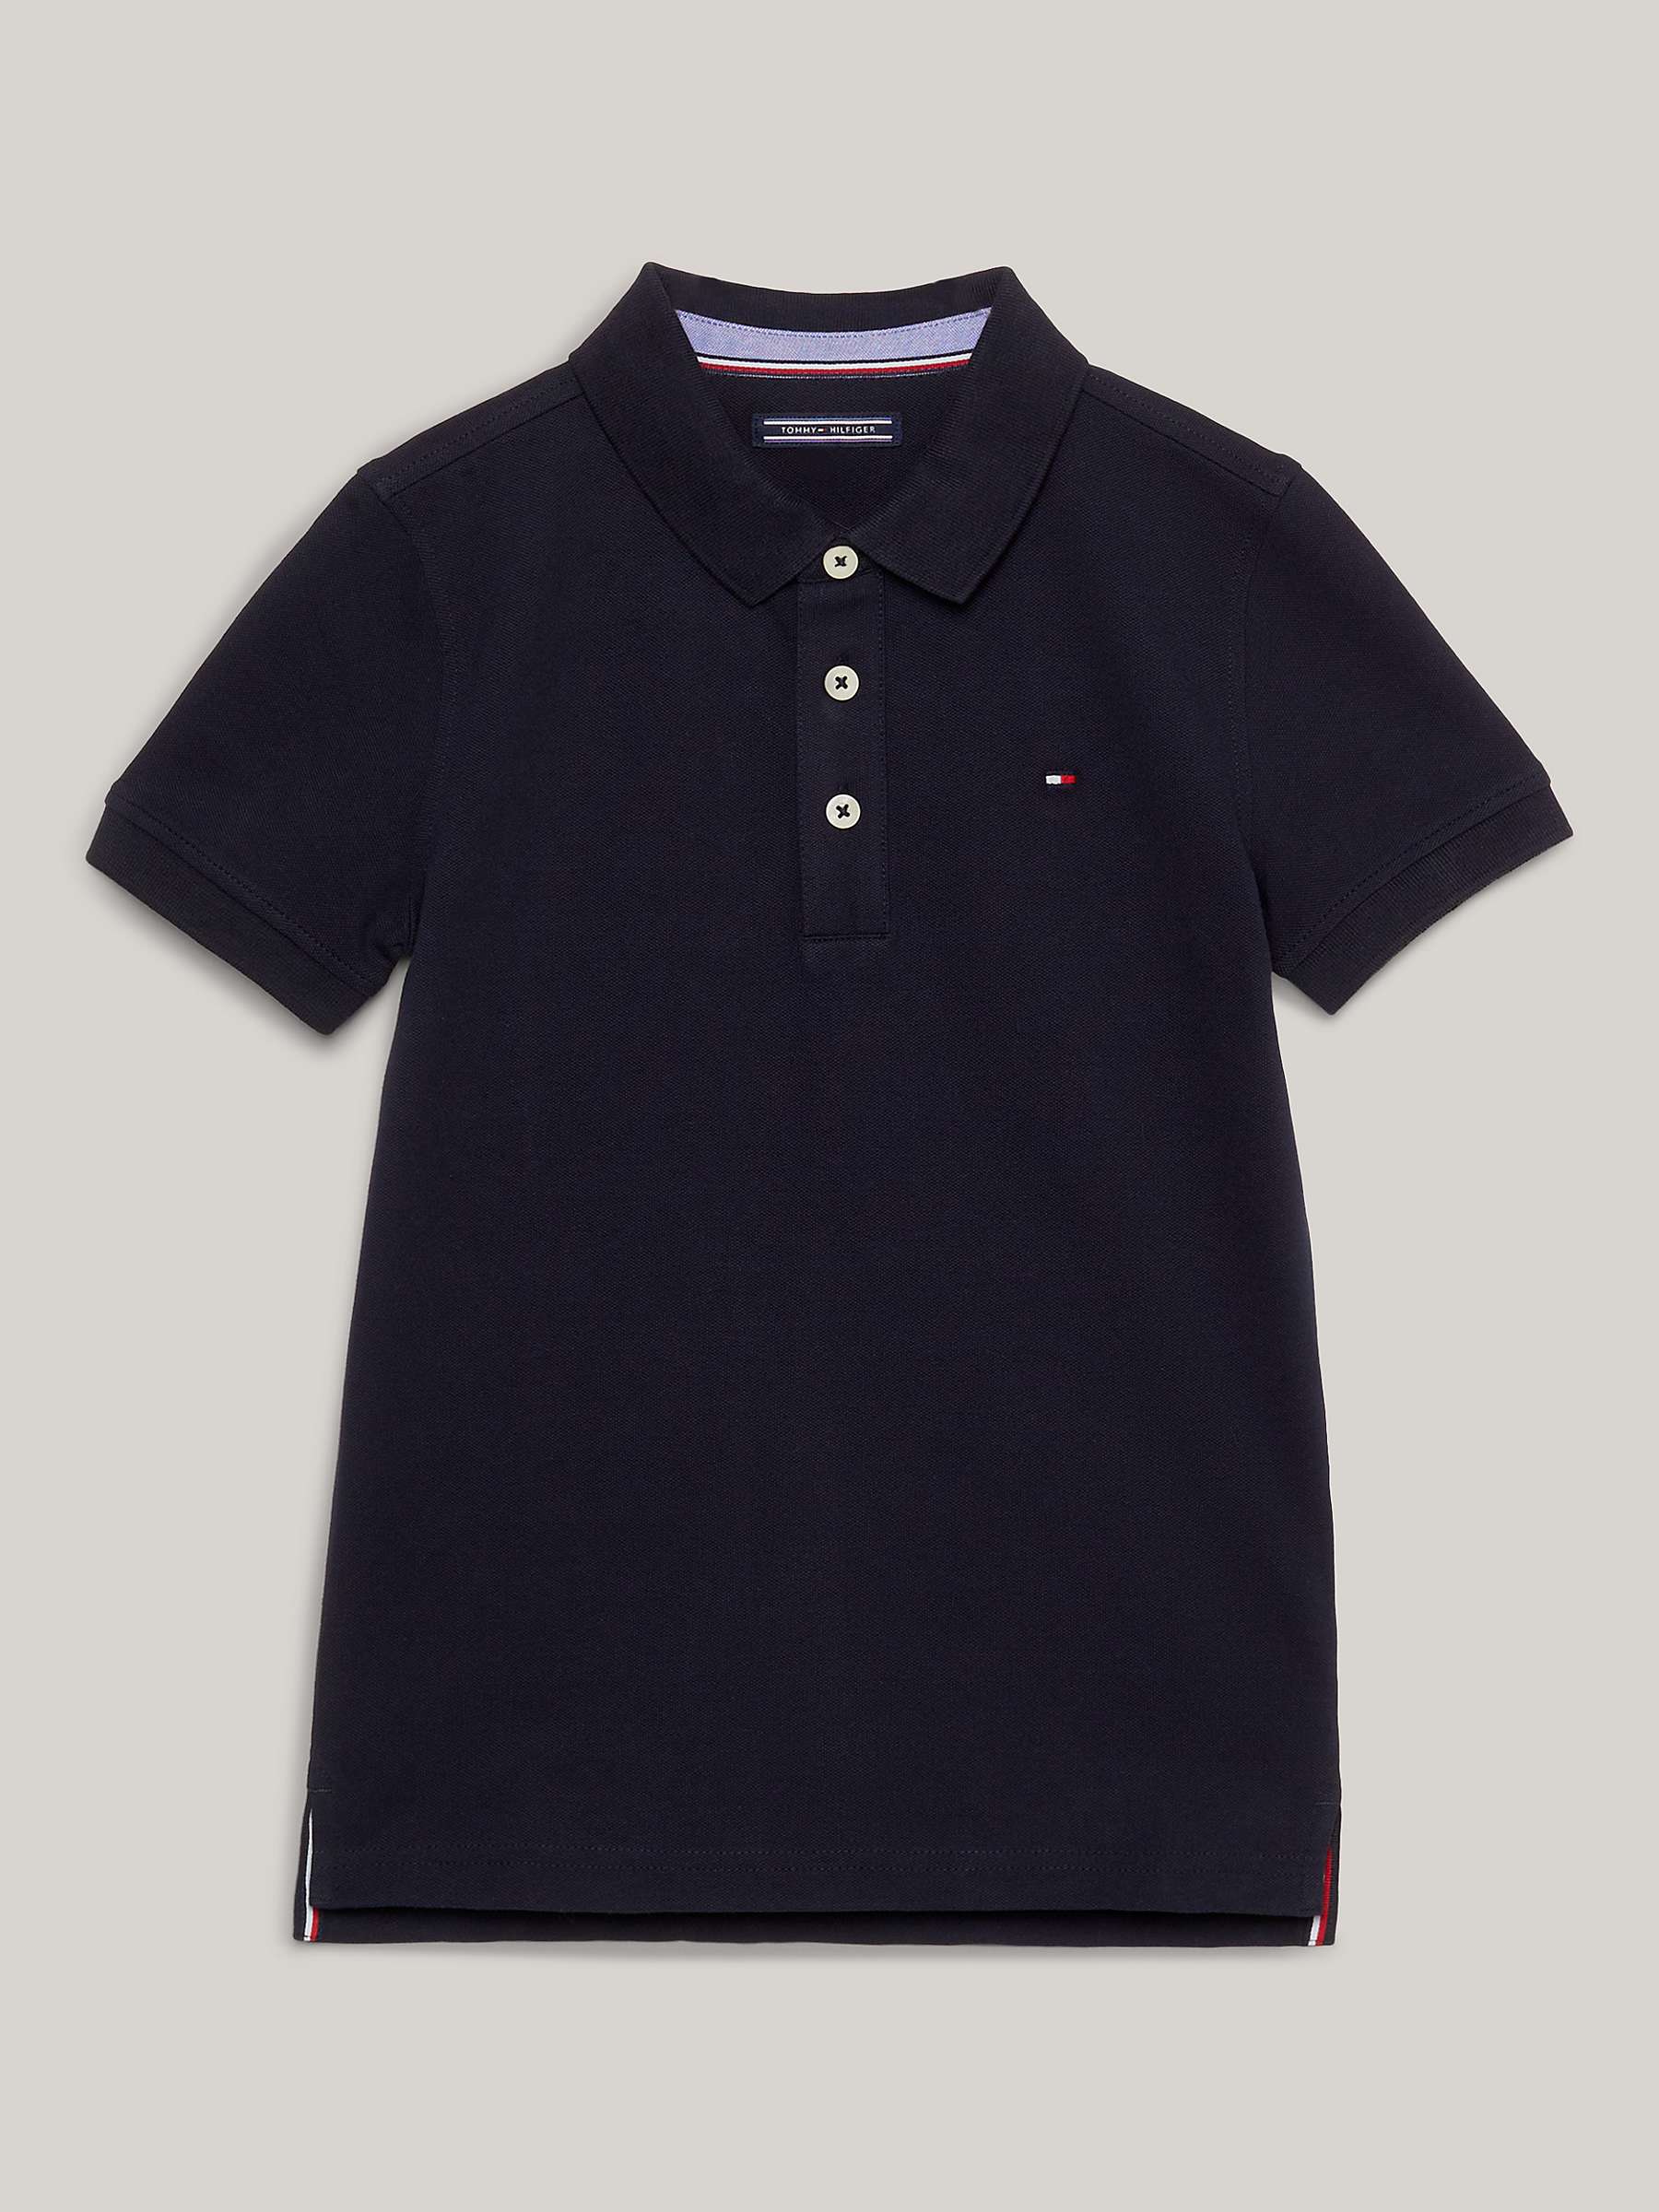 Buy Tommy Hilfiger Kids' Organic Cotton Short Sleeve Polo Shirt Online at johnlewis.com